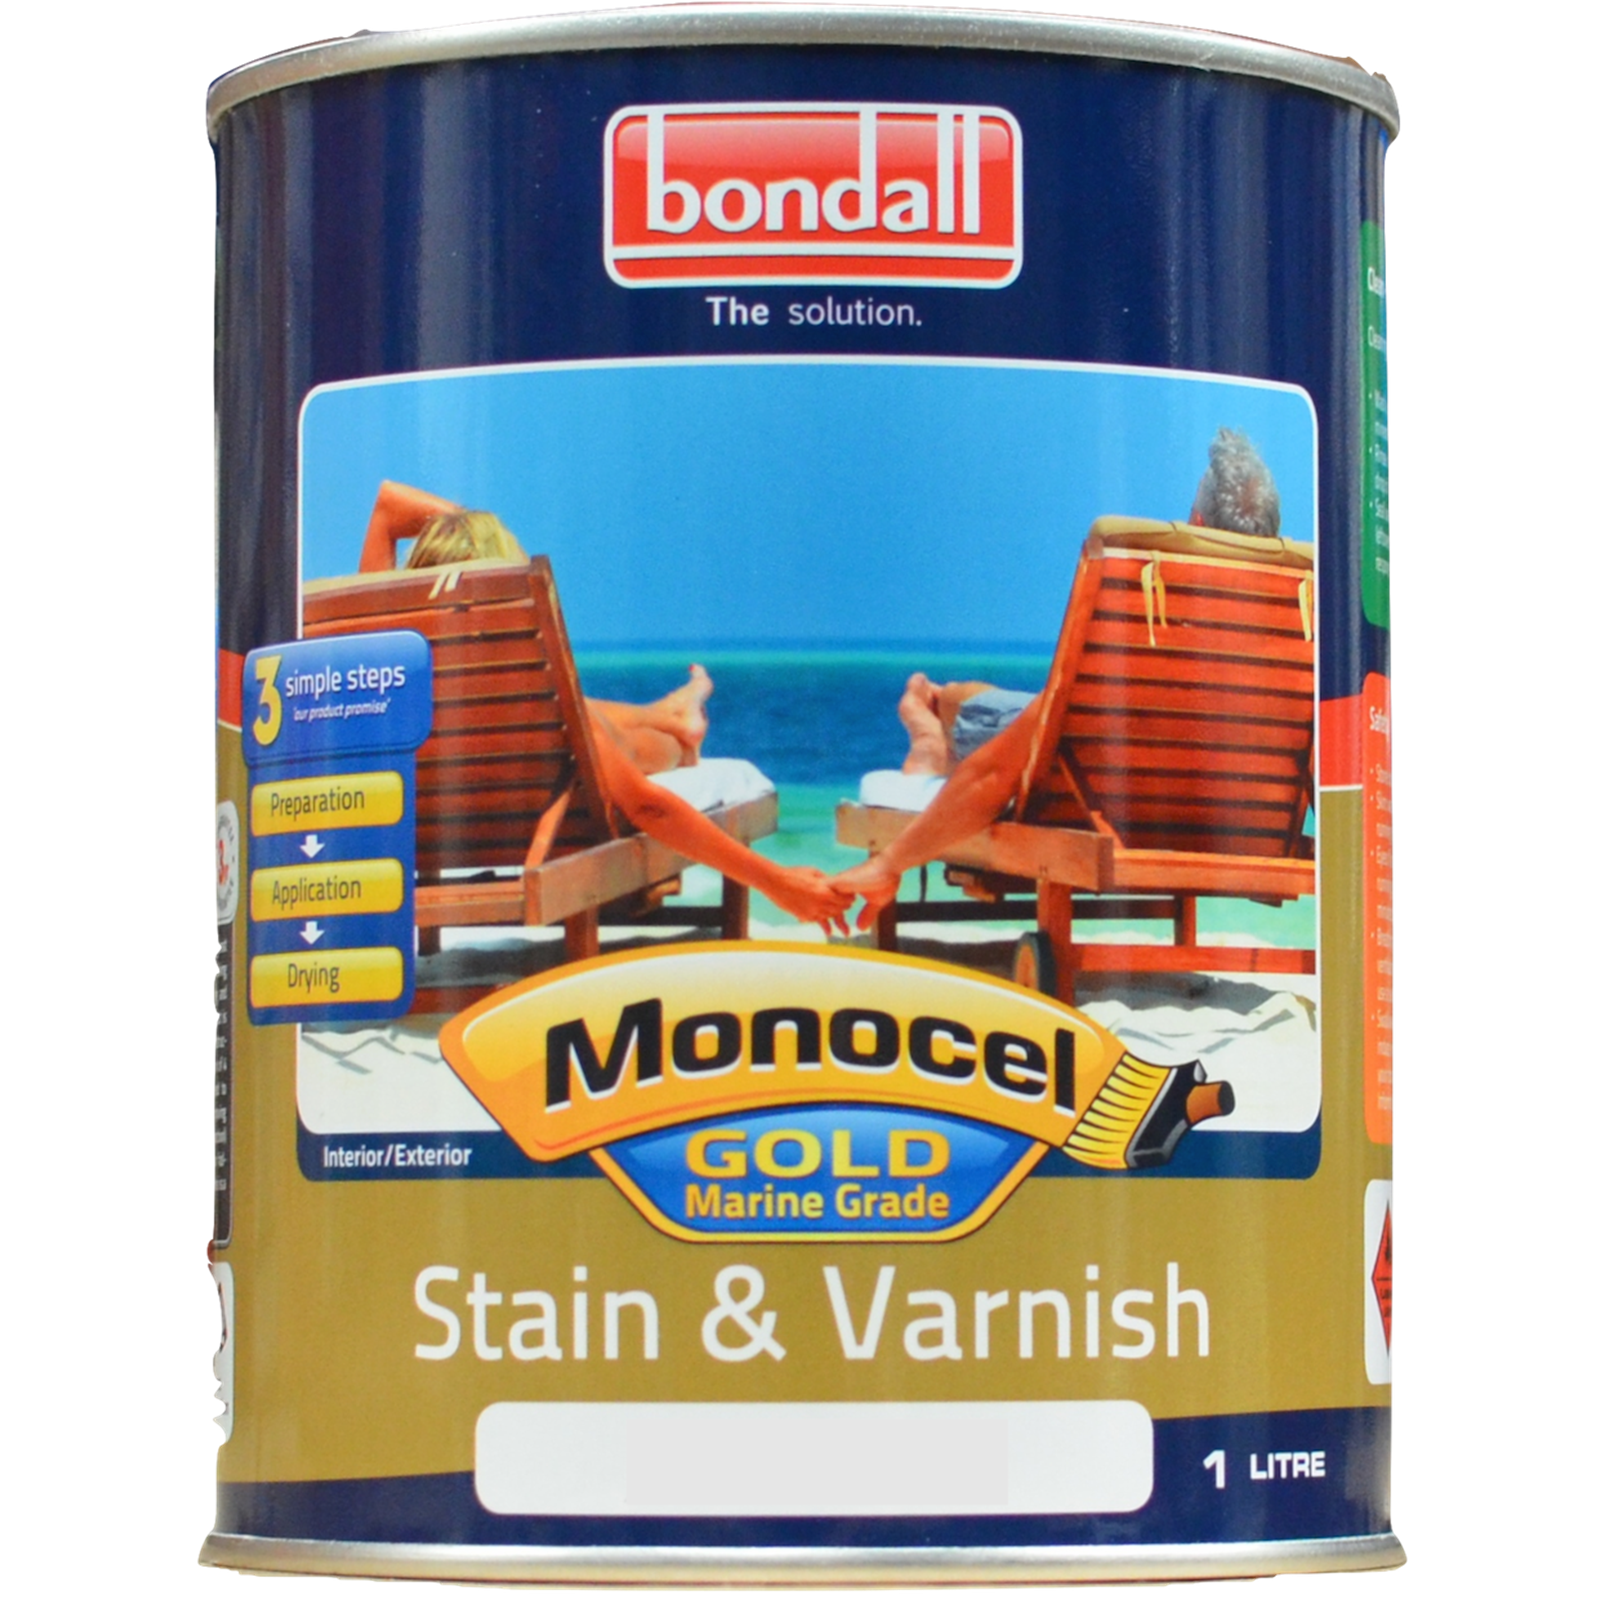 Bondall Monocel Gold 1L Jarrah Marine Grade Stain and Varnish